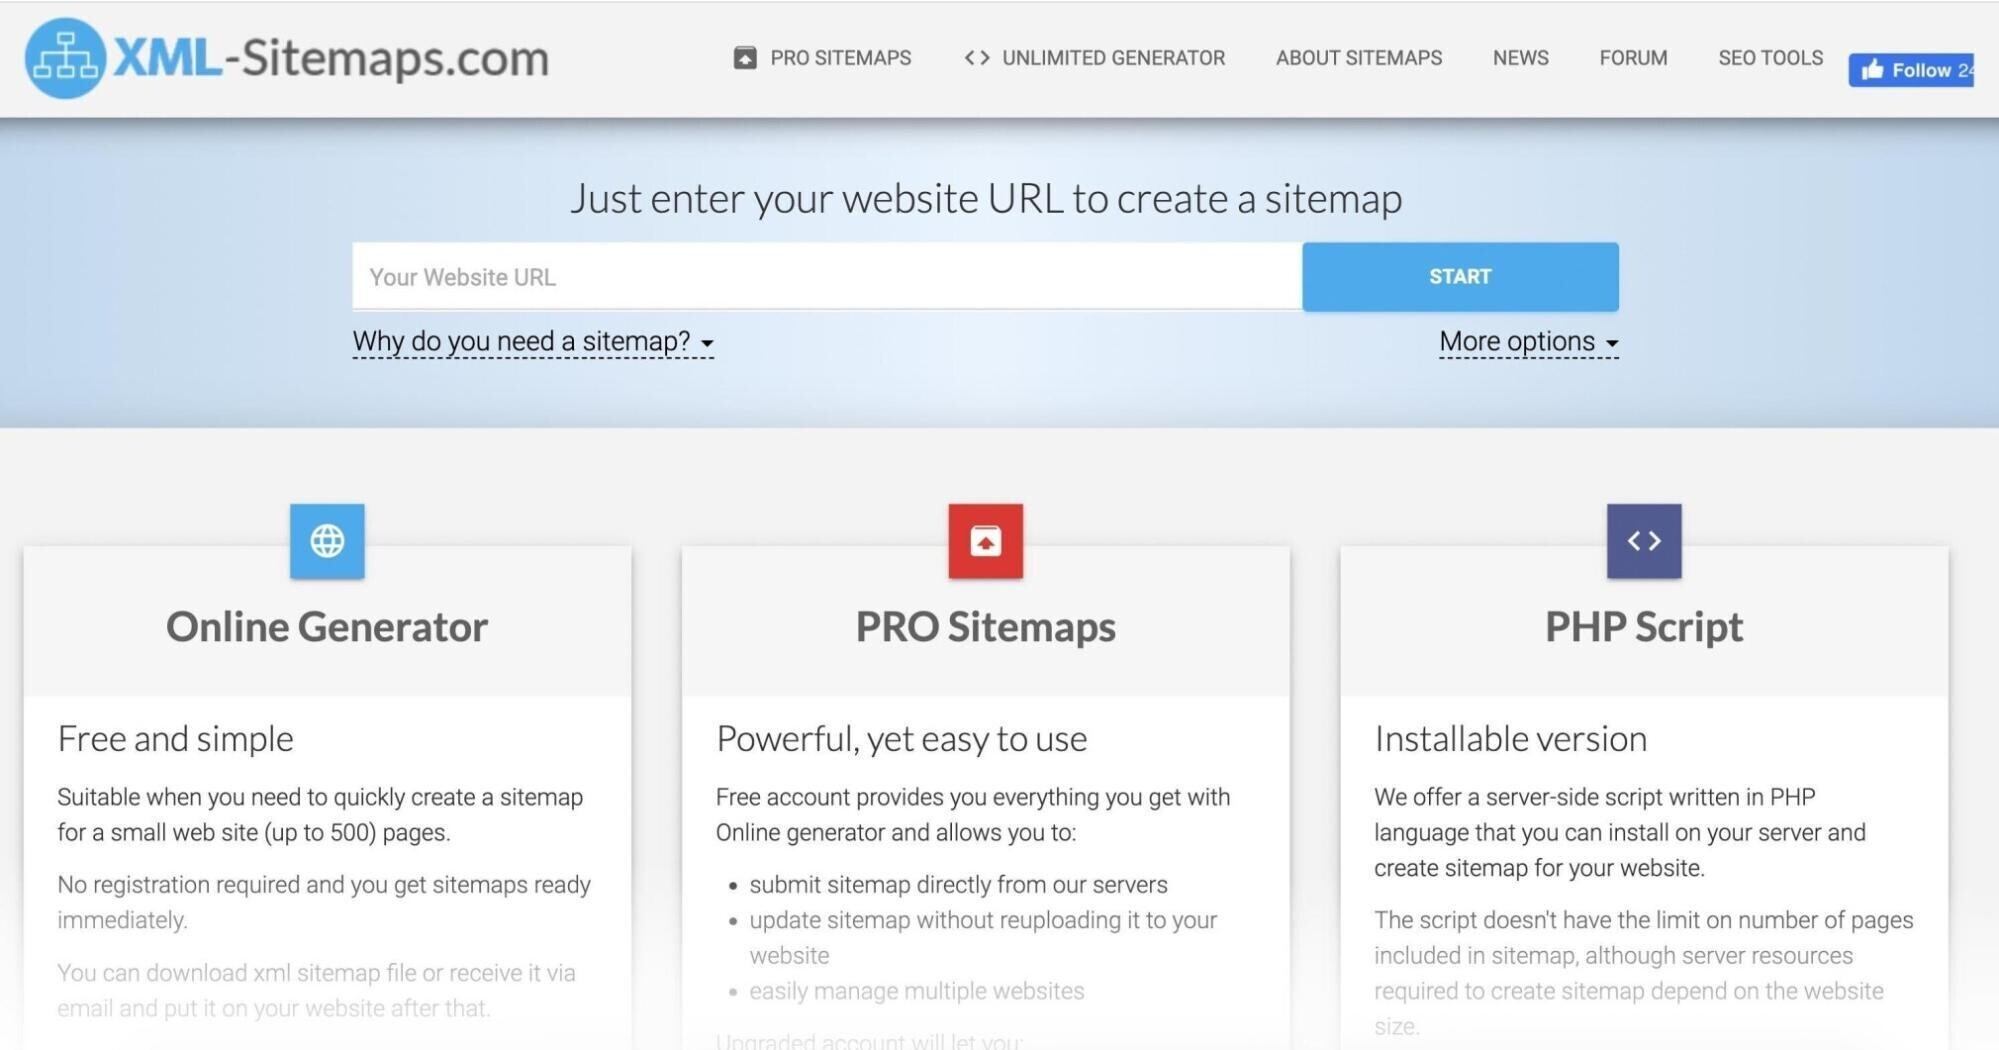 XML Sitemaps.com home page